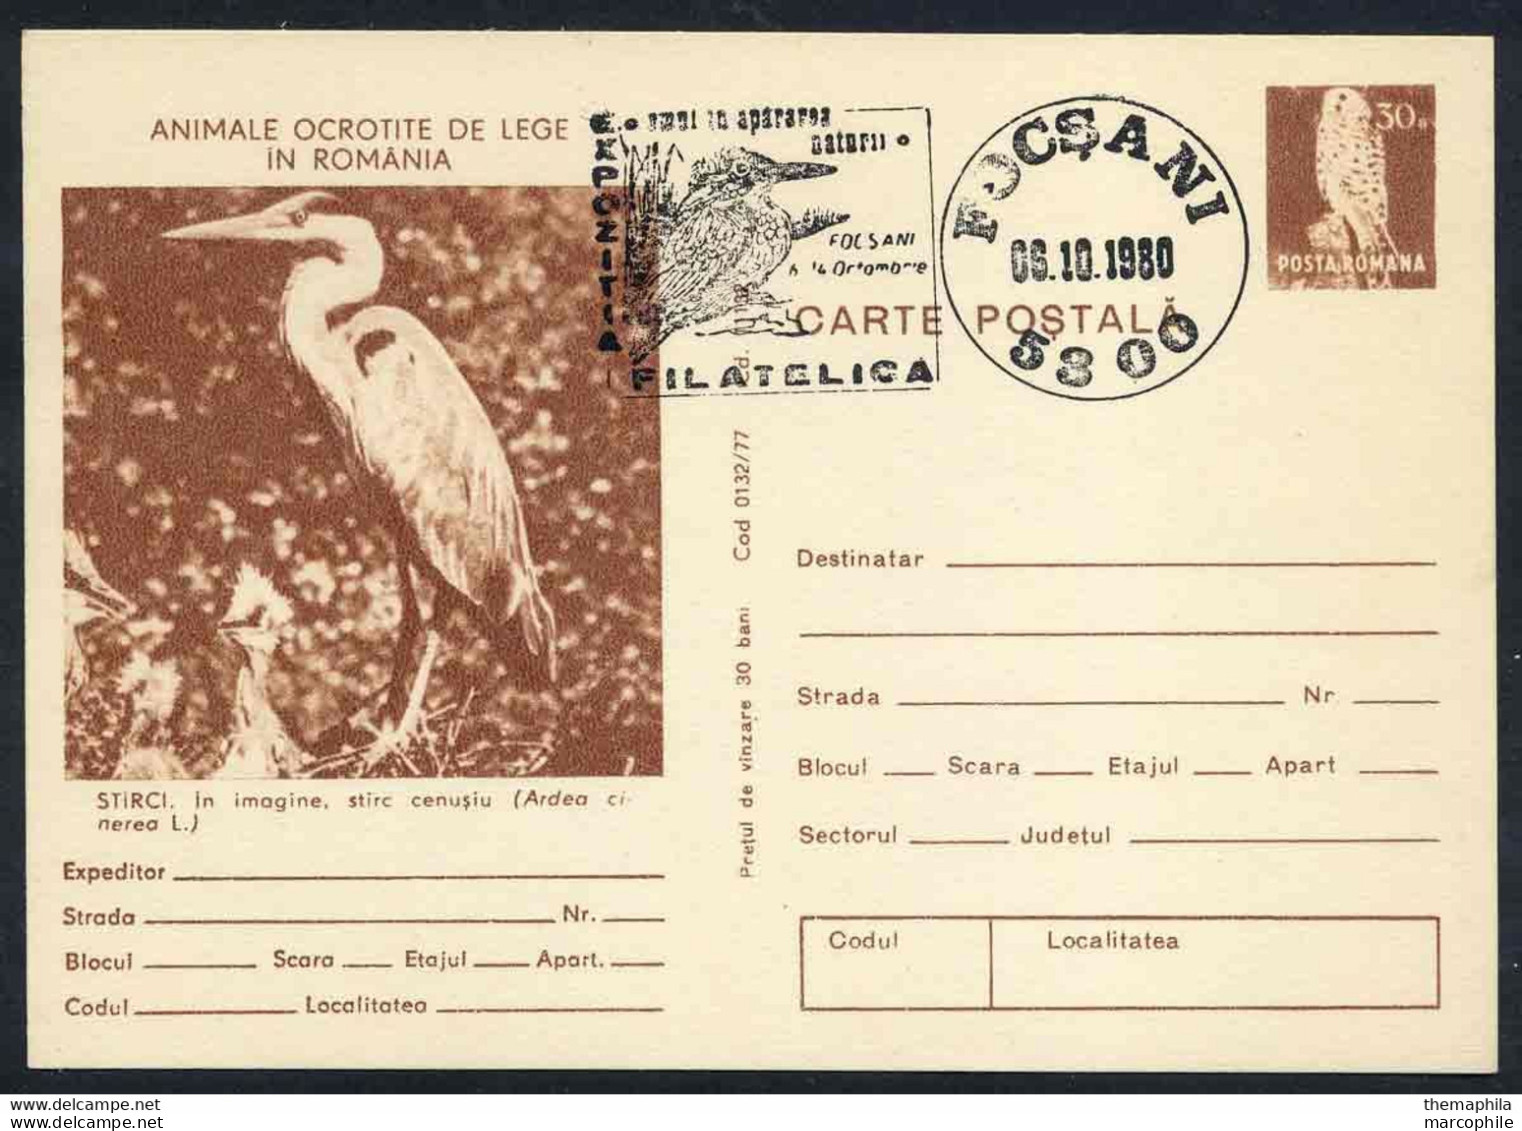 HERON CENDRE - PELICANIDE - ARDEA CINEREA / 1980 ROUMANIE ENTIER POSTAL ILLUSTRE (ref 739a) - Pelicans